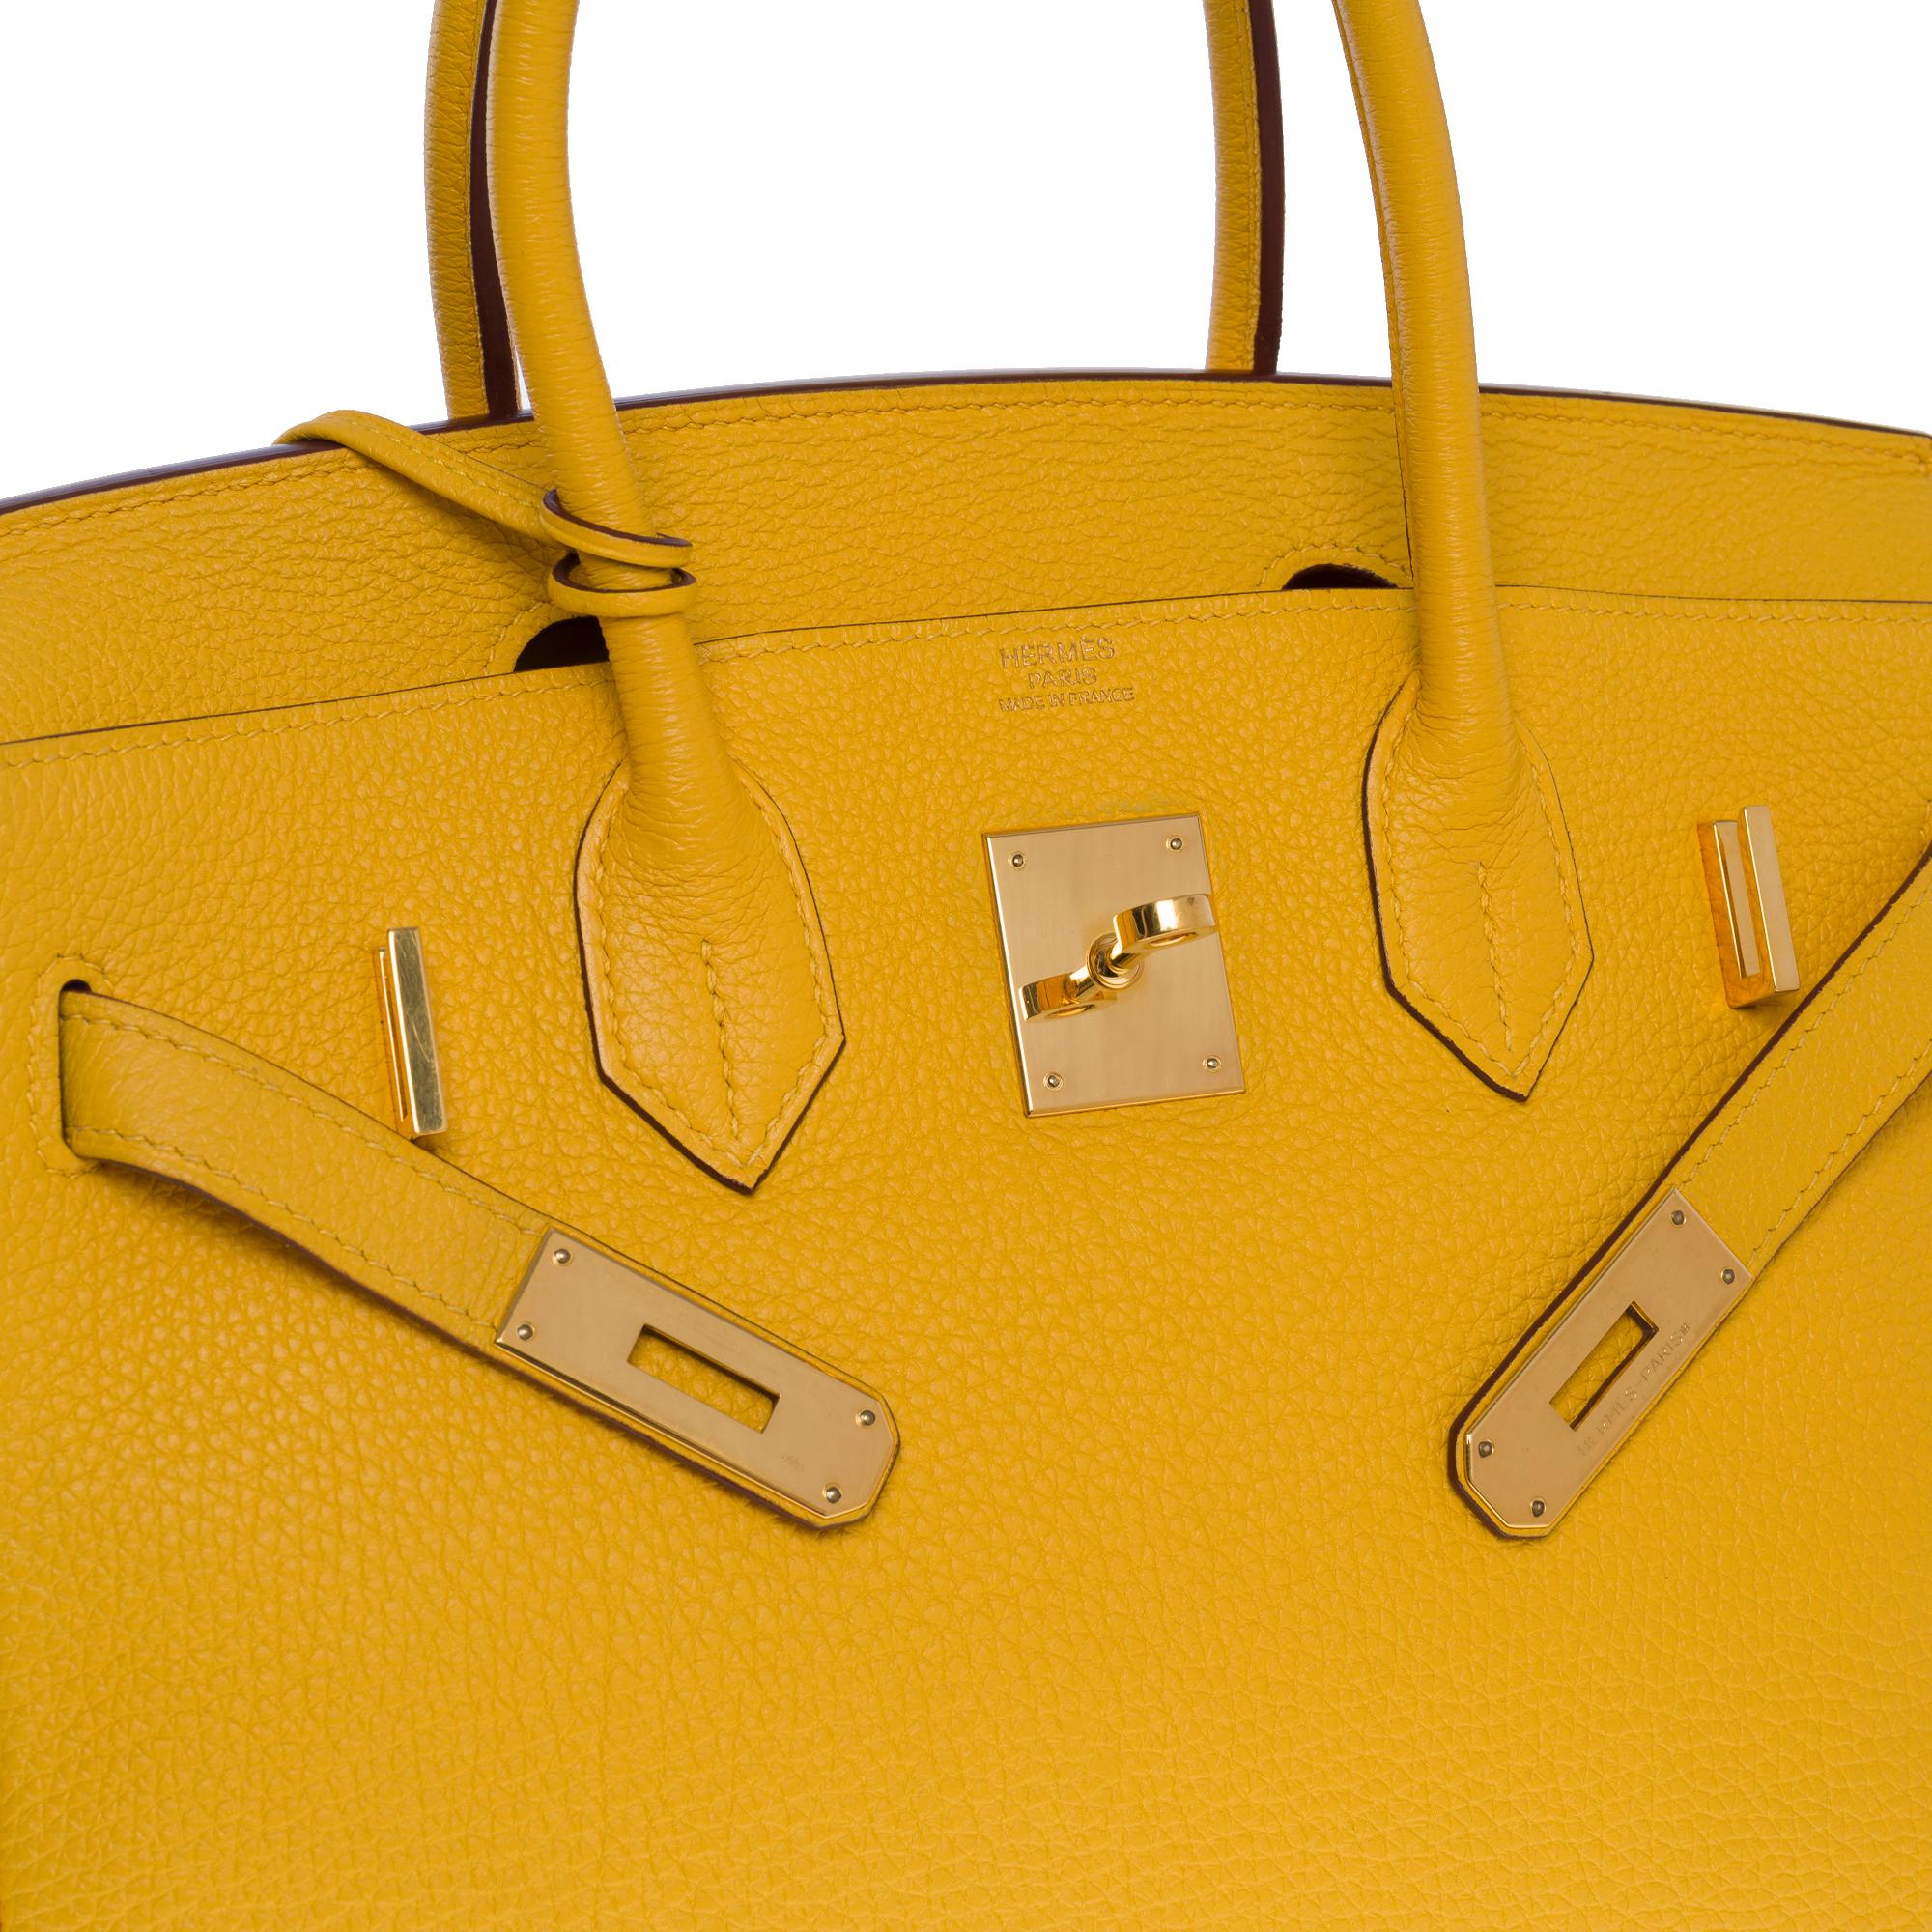 Amazing & Bright Hermès Birkin 30 handbag in Yellow Togo leather, GHW 2